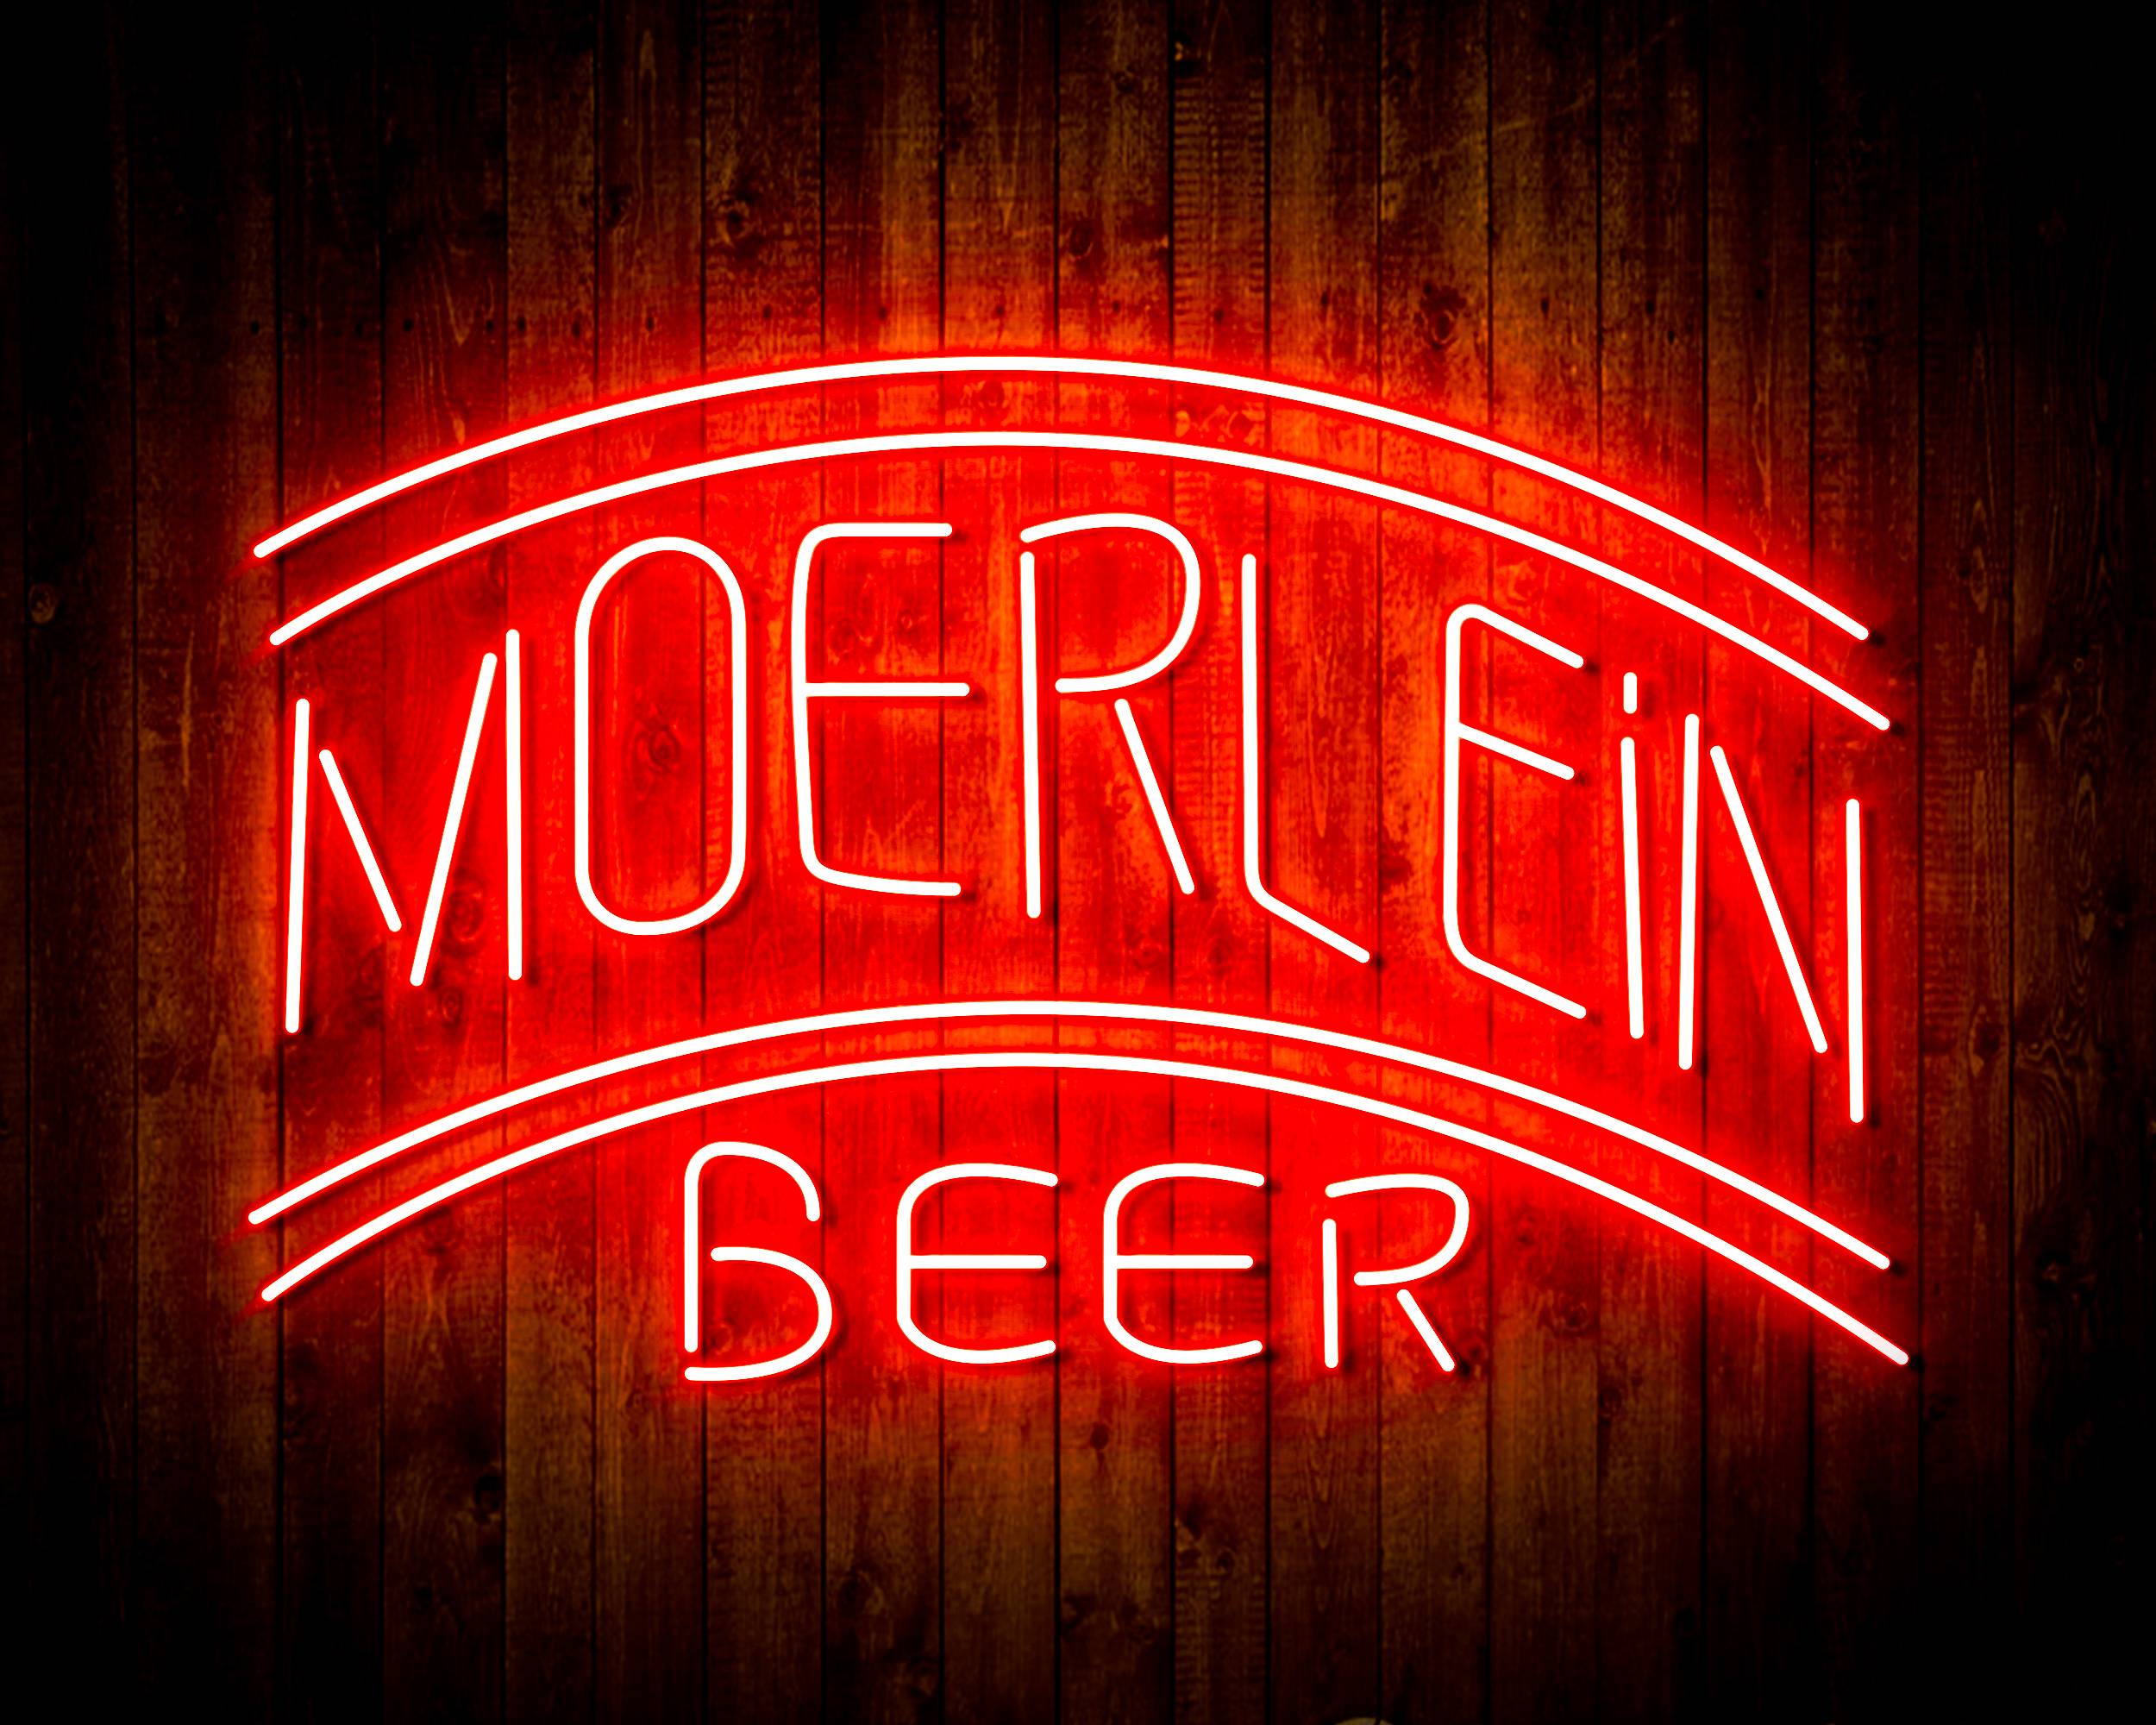 Moerlein Beer Handmade Neon Flex LED Sign